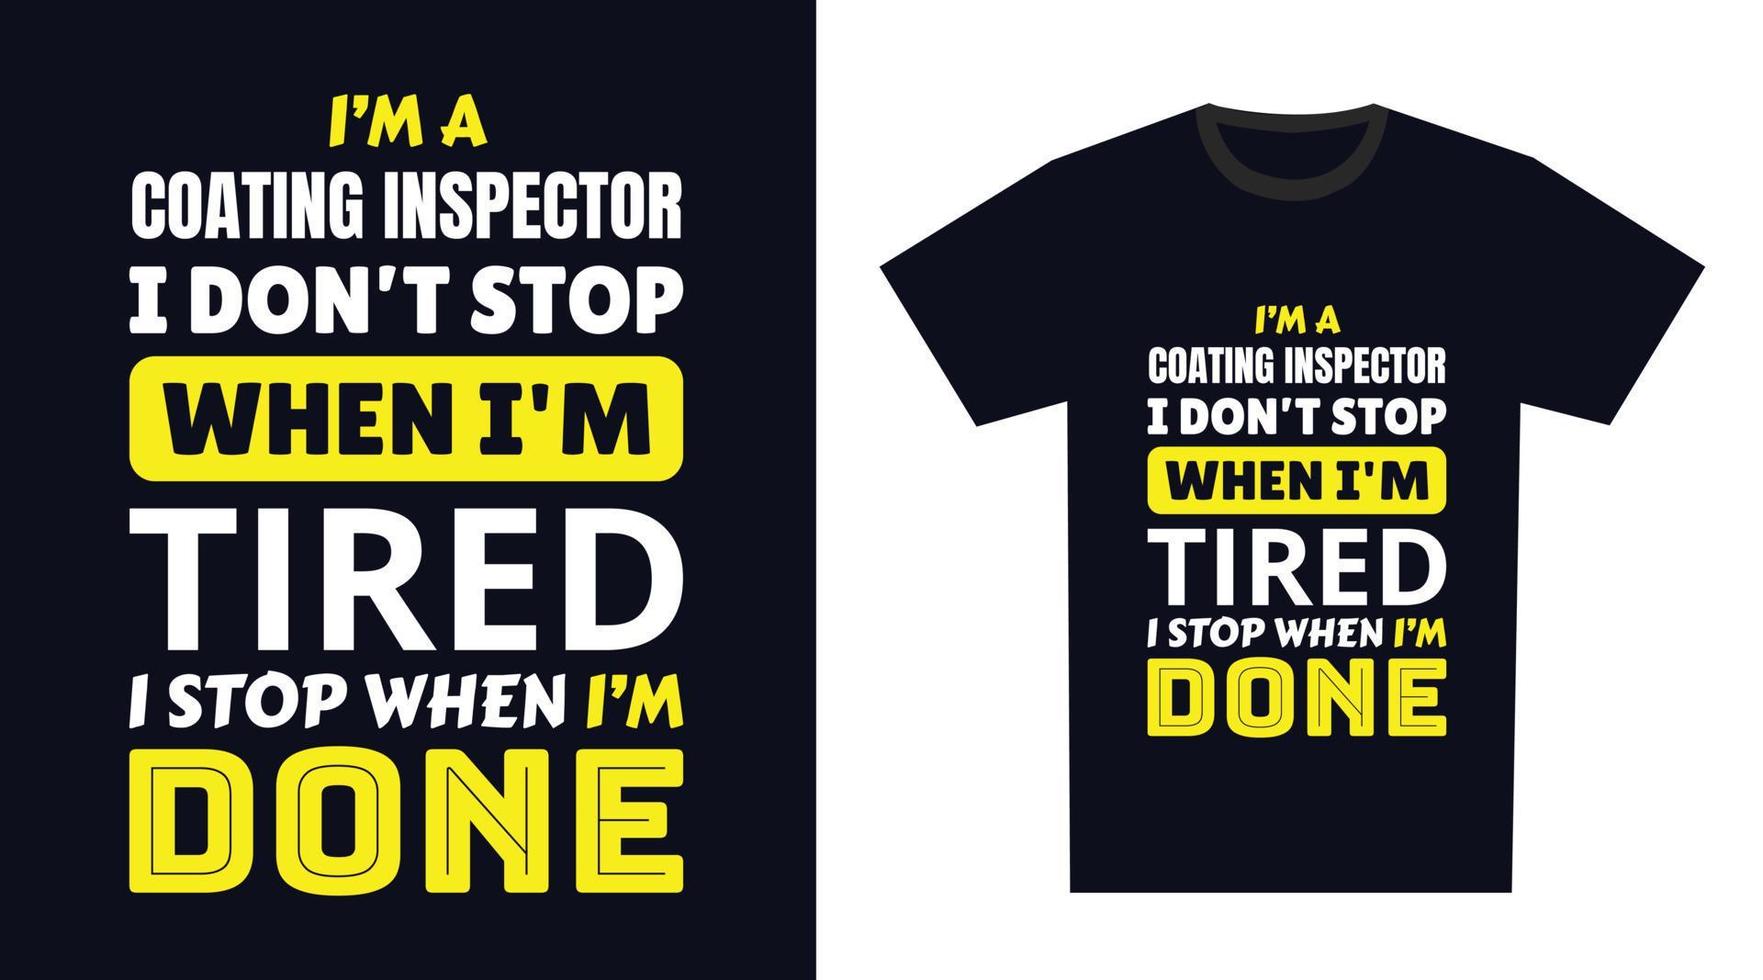 coating inspector T Shirt Design. I 'm a coating inspector I Don't Stop When I'm Tired, I Stop When I'm Done vector